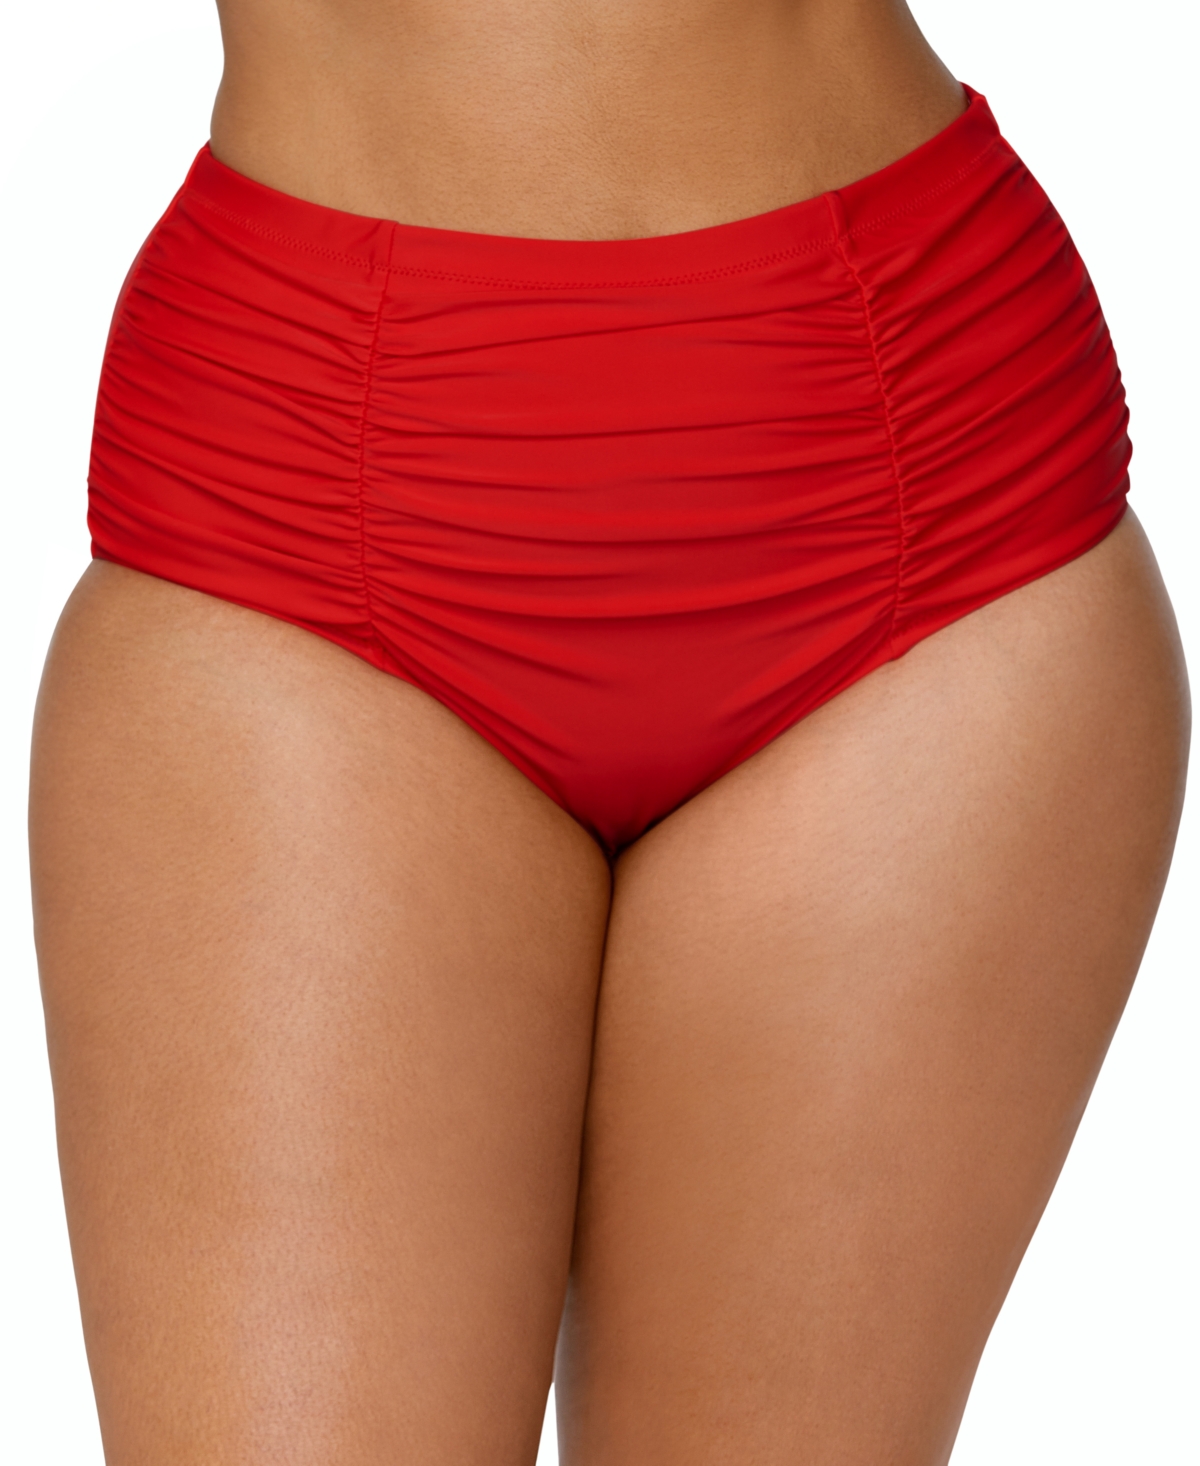 Plus Size Costa Bikini Bottoms - Red